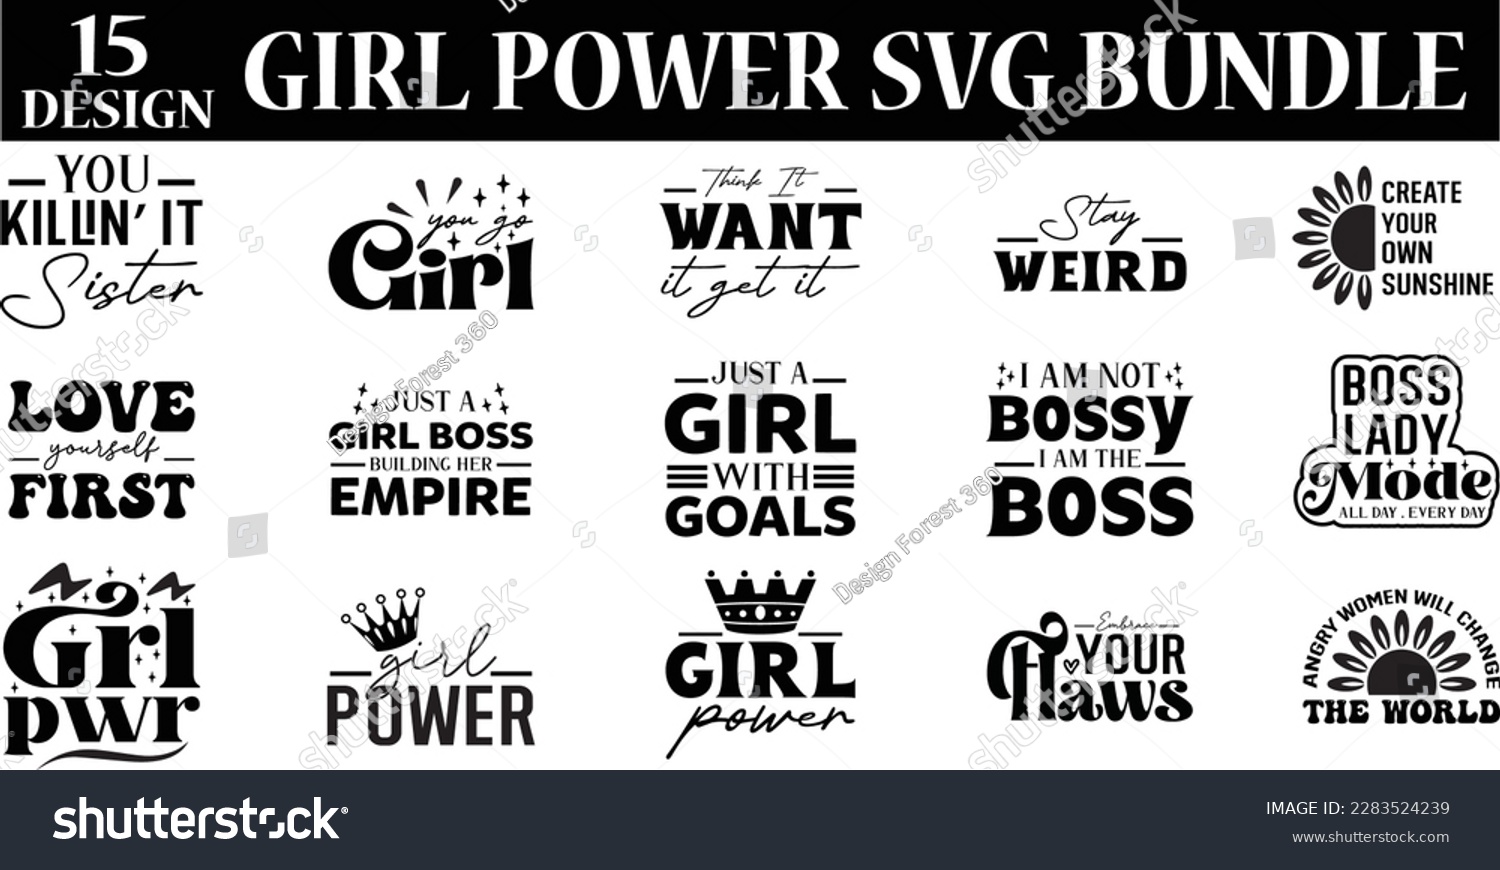 girl power svg bundle, girl power svg design - Royalty Free Stock ...